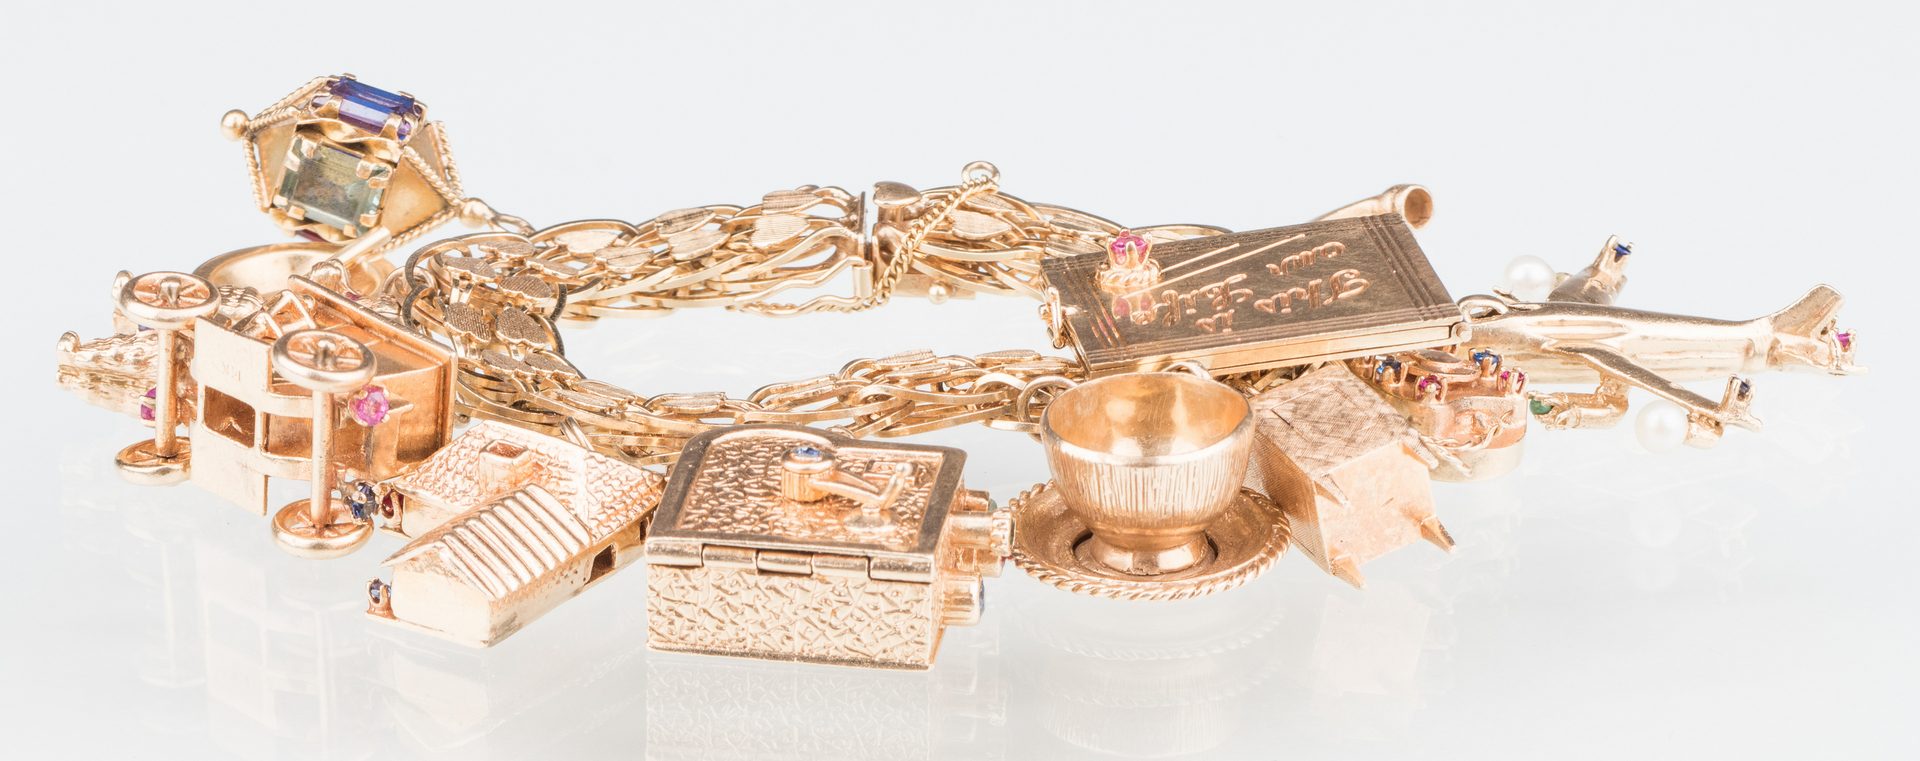 Lot 49: 14K Vintage Charm Bracelet, 126 grams